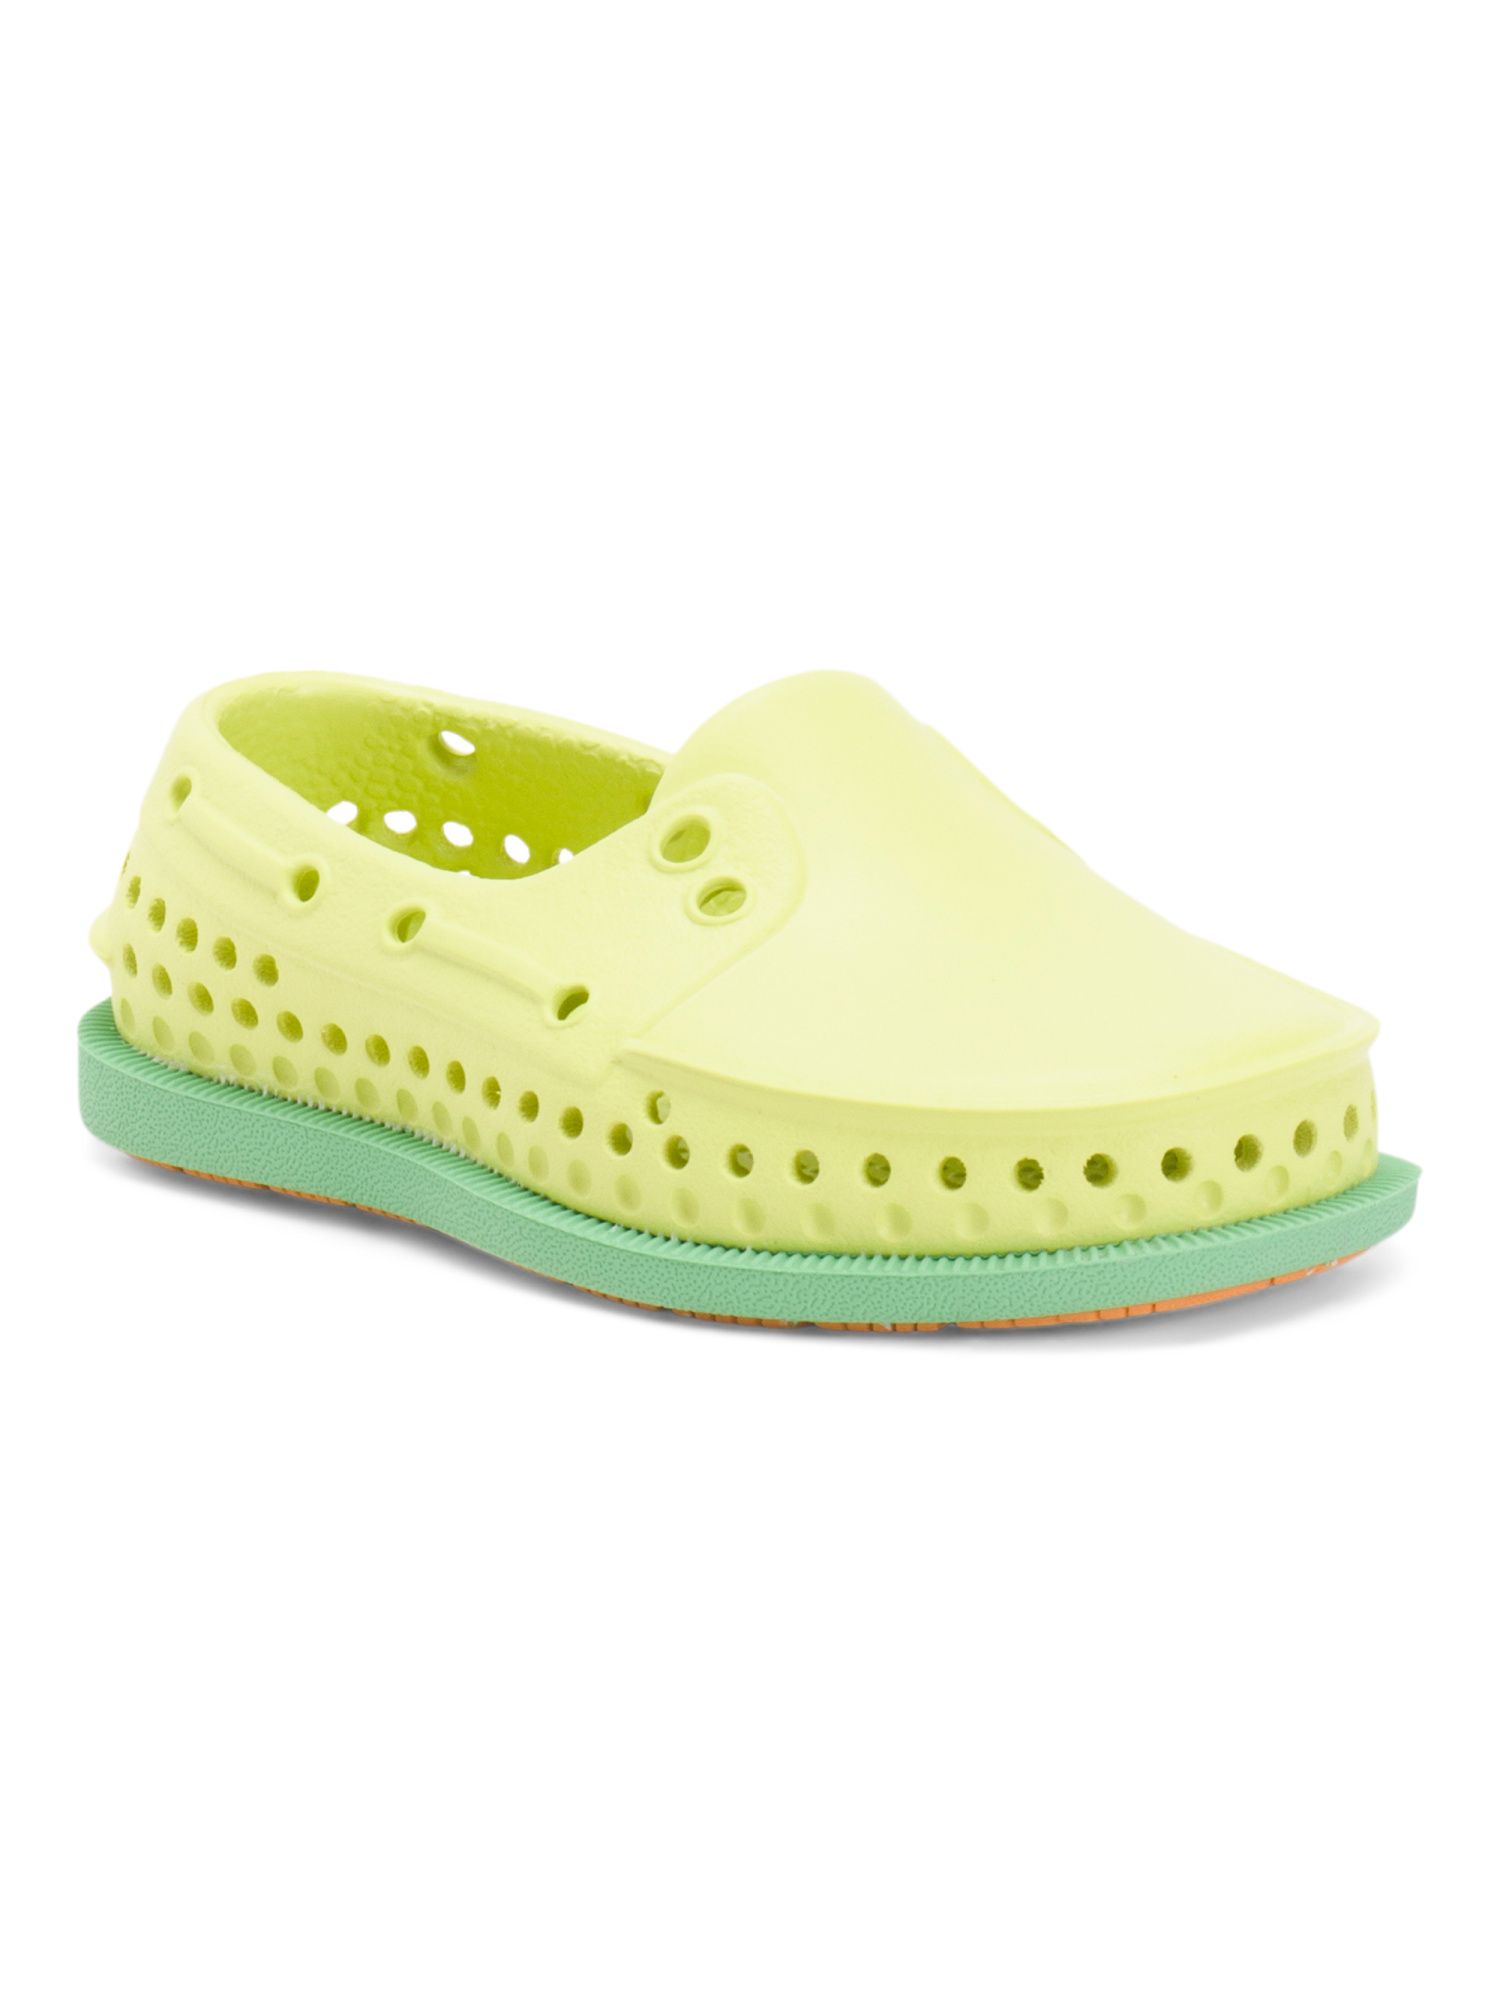 Howard Sugarlite Boat Slip On Shoes (Baby, Toddler) | Marshalls